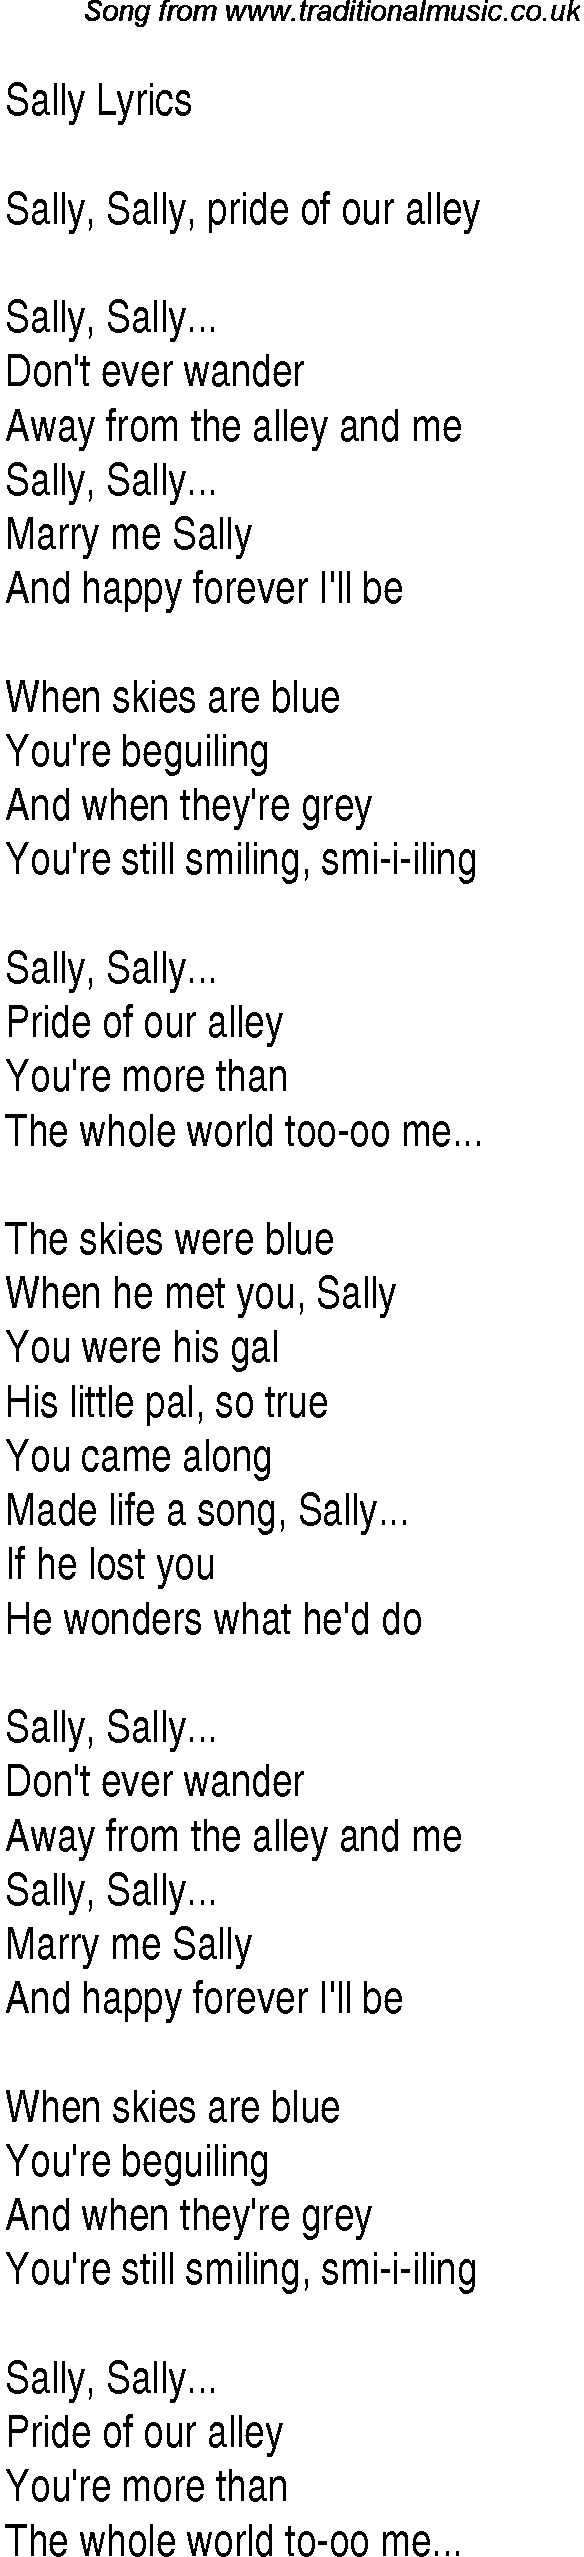 1940s top songs - lyrics for Sally(Gracie Fields)